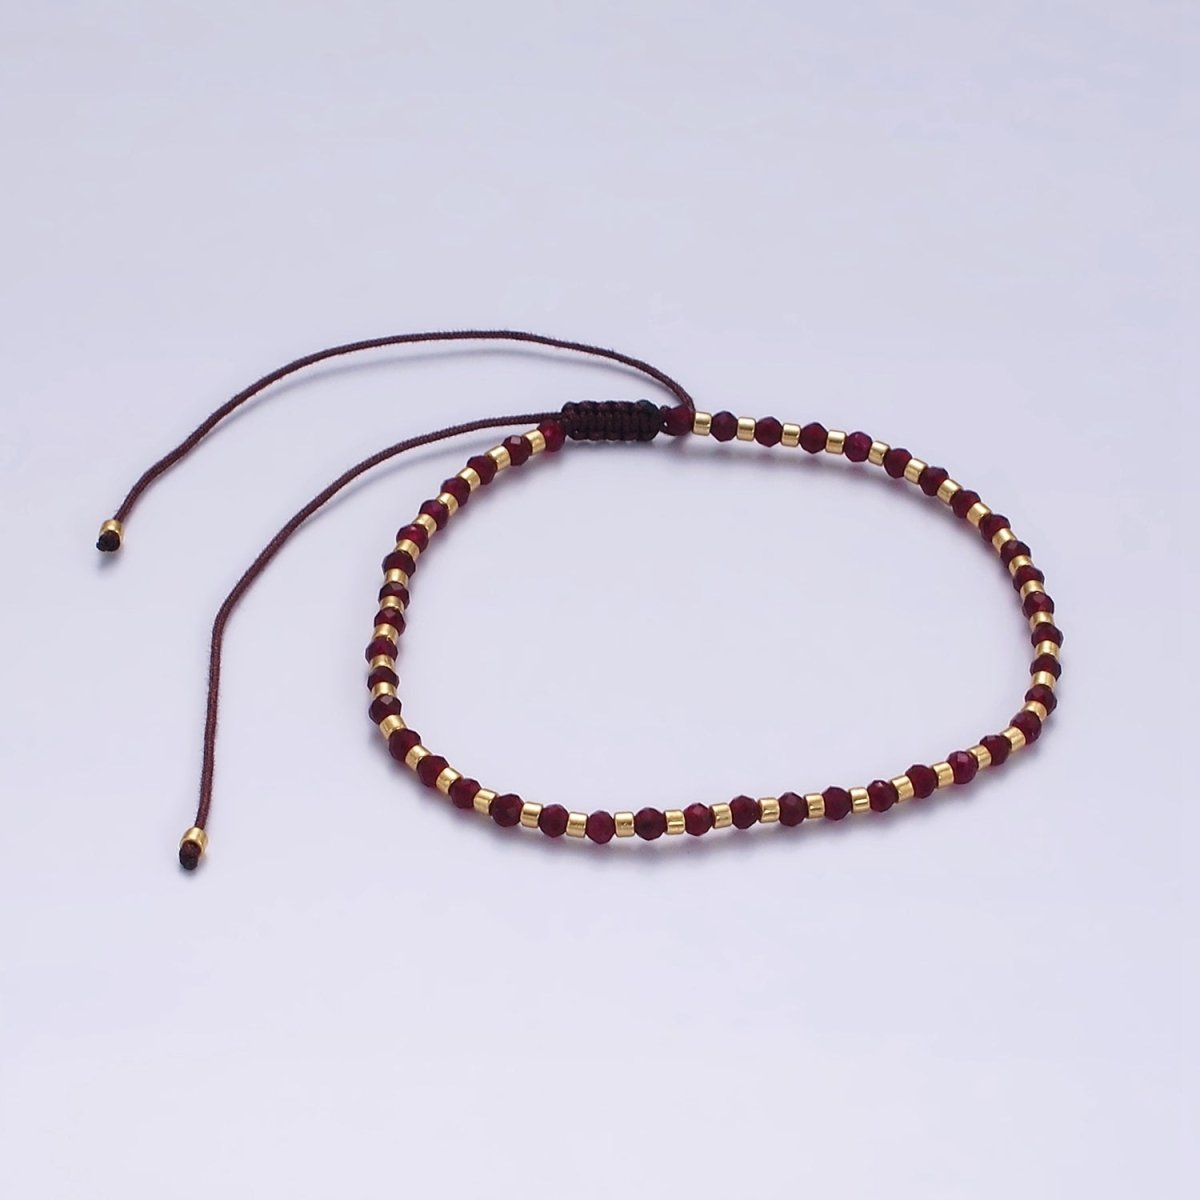 14K Gold Filled Garnet Multifaceted Red Rope Adjustable Friendship Bracelet | WA-2016 - WA-2164 Clearance Pricing - DLUXCA